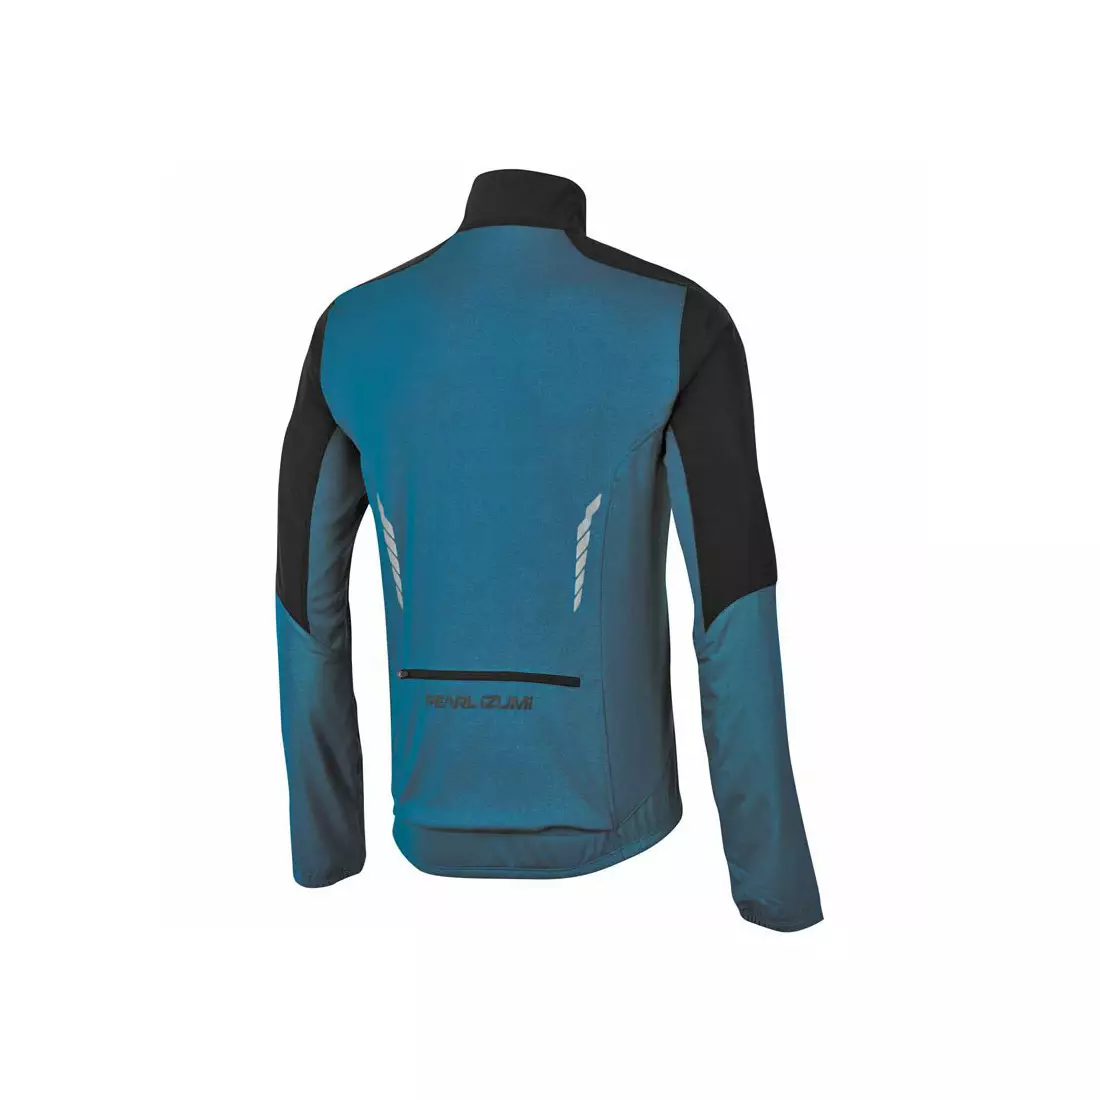 PEARL IZUMI Select Thermal Barrier 11131411-4EK - pánska cyklistická bunda, farba: čierna a modrá